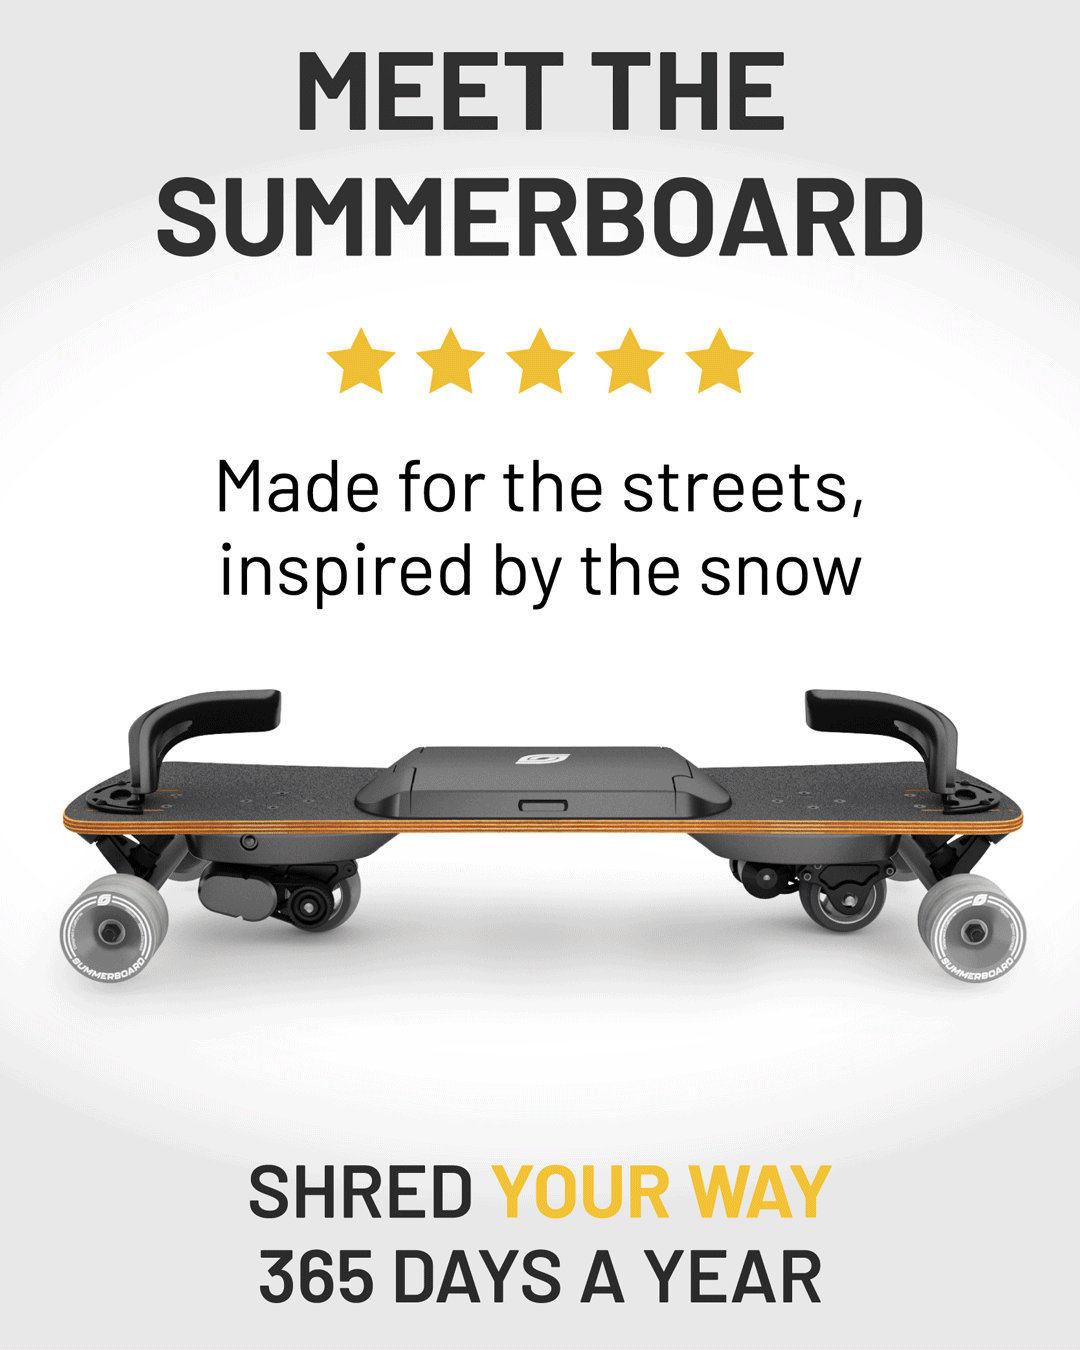 Summerboard SBX E-Snowboard for Sale Canada - Buy